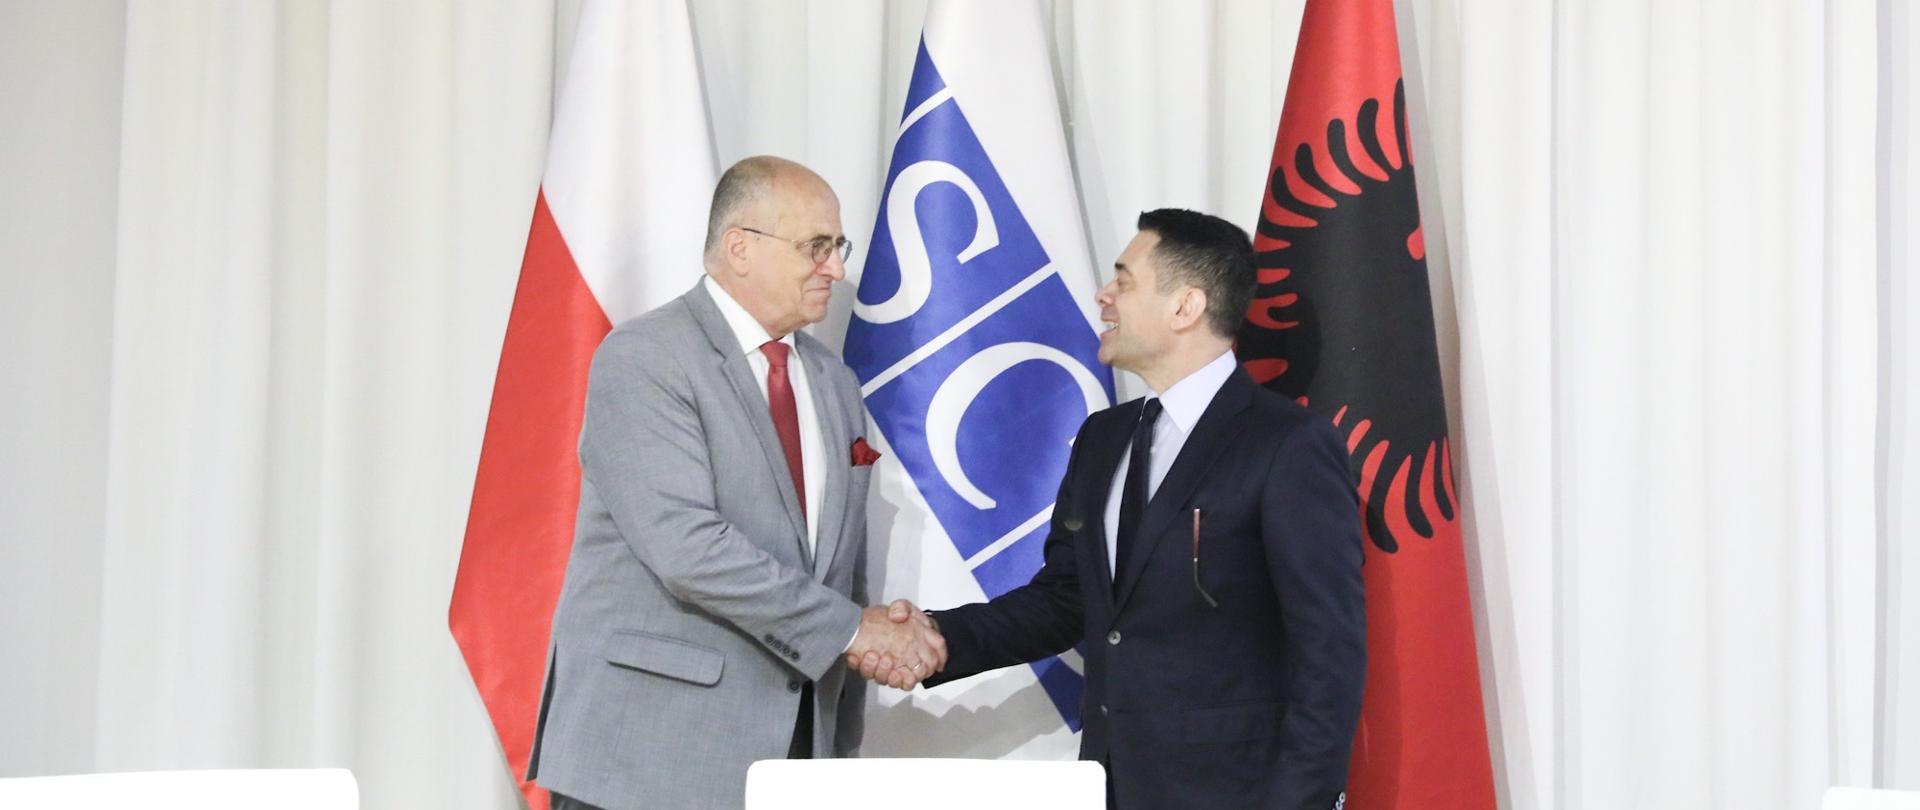 Minister Zbigniew Rau paid a visit to Albania